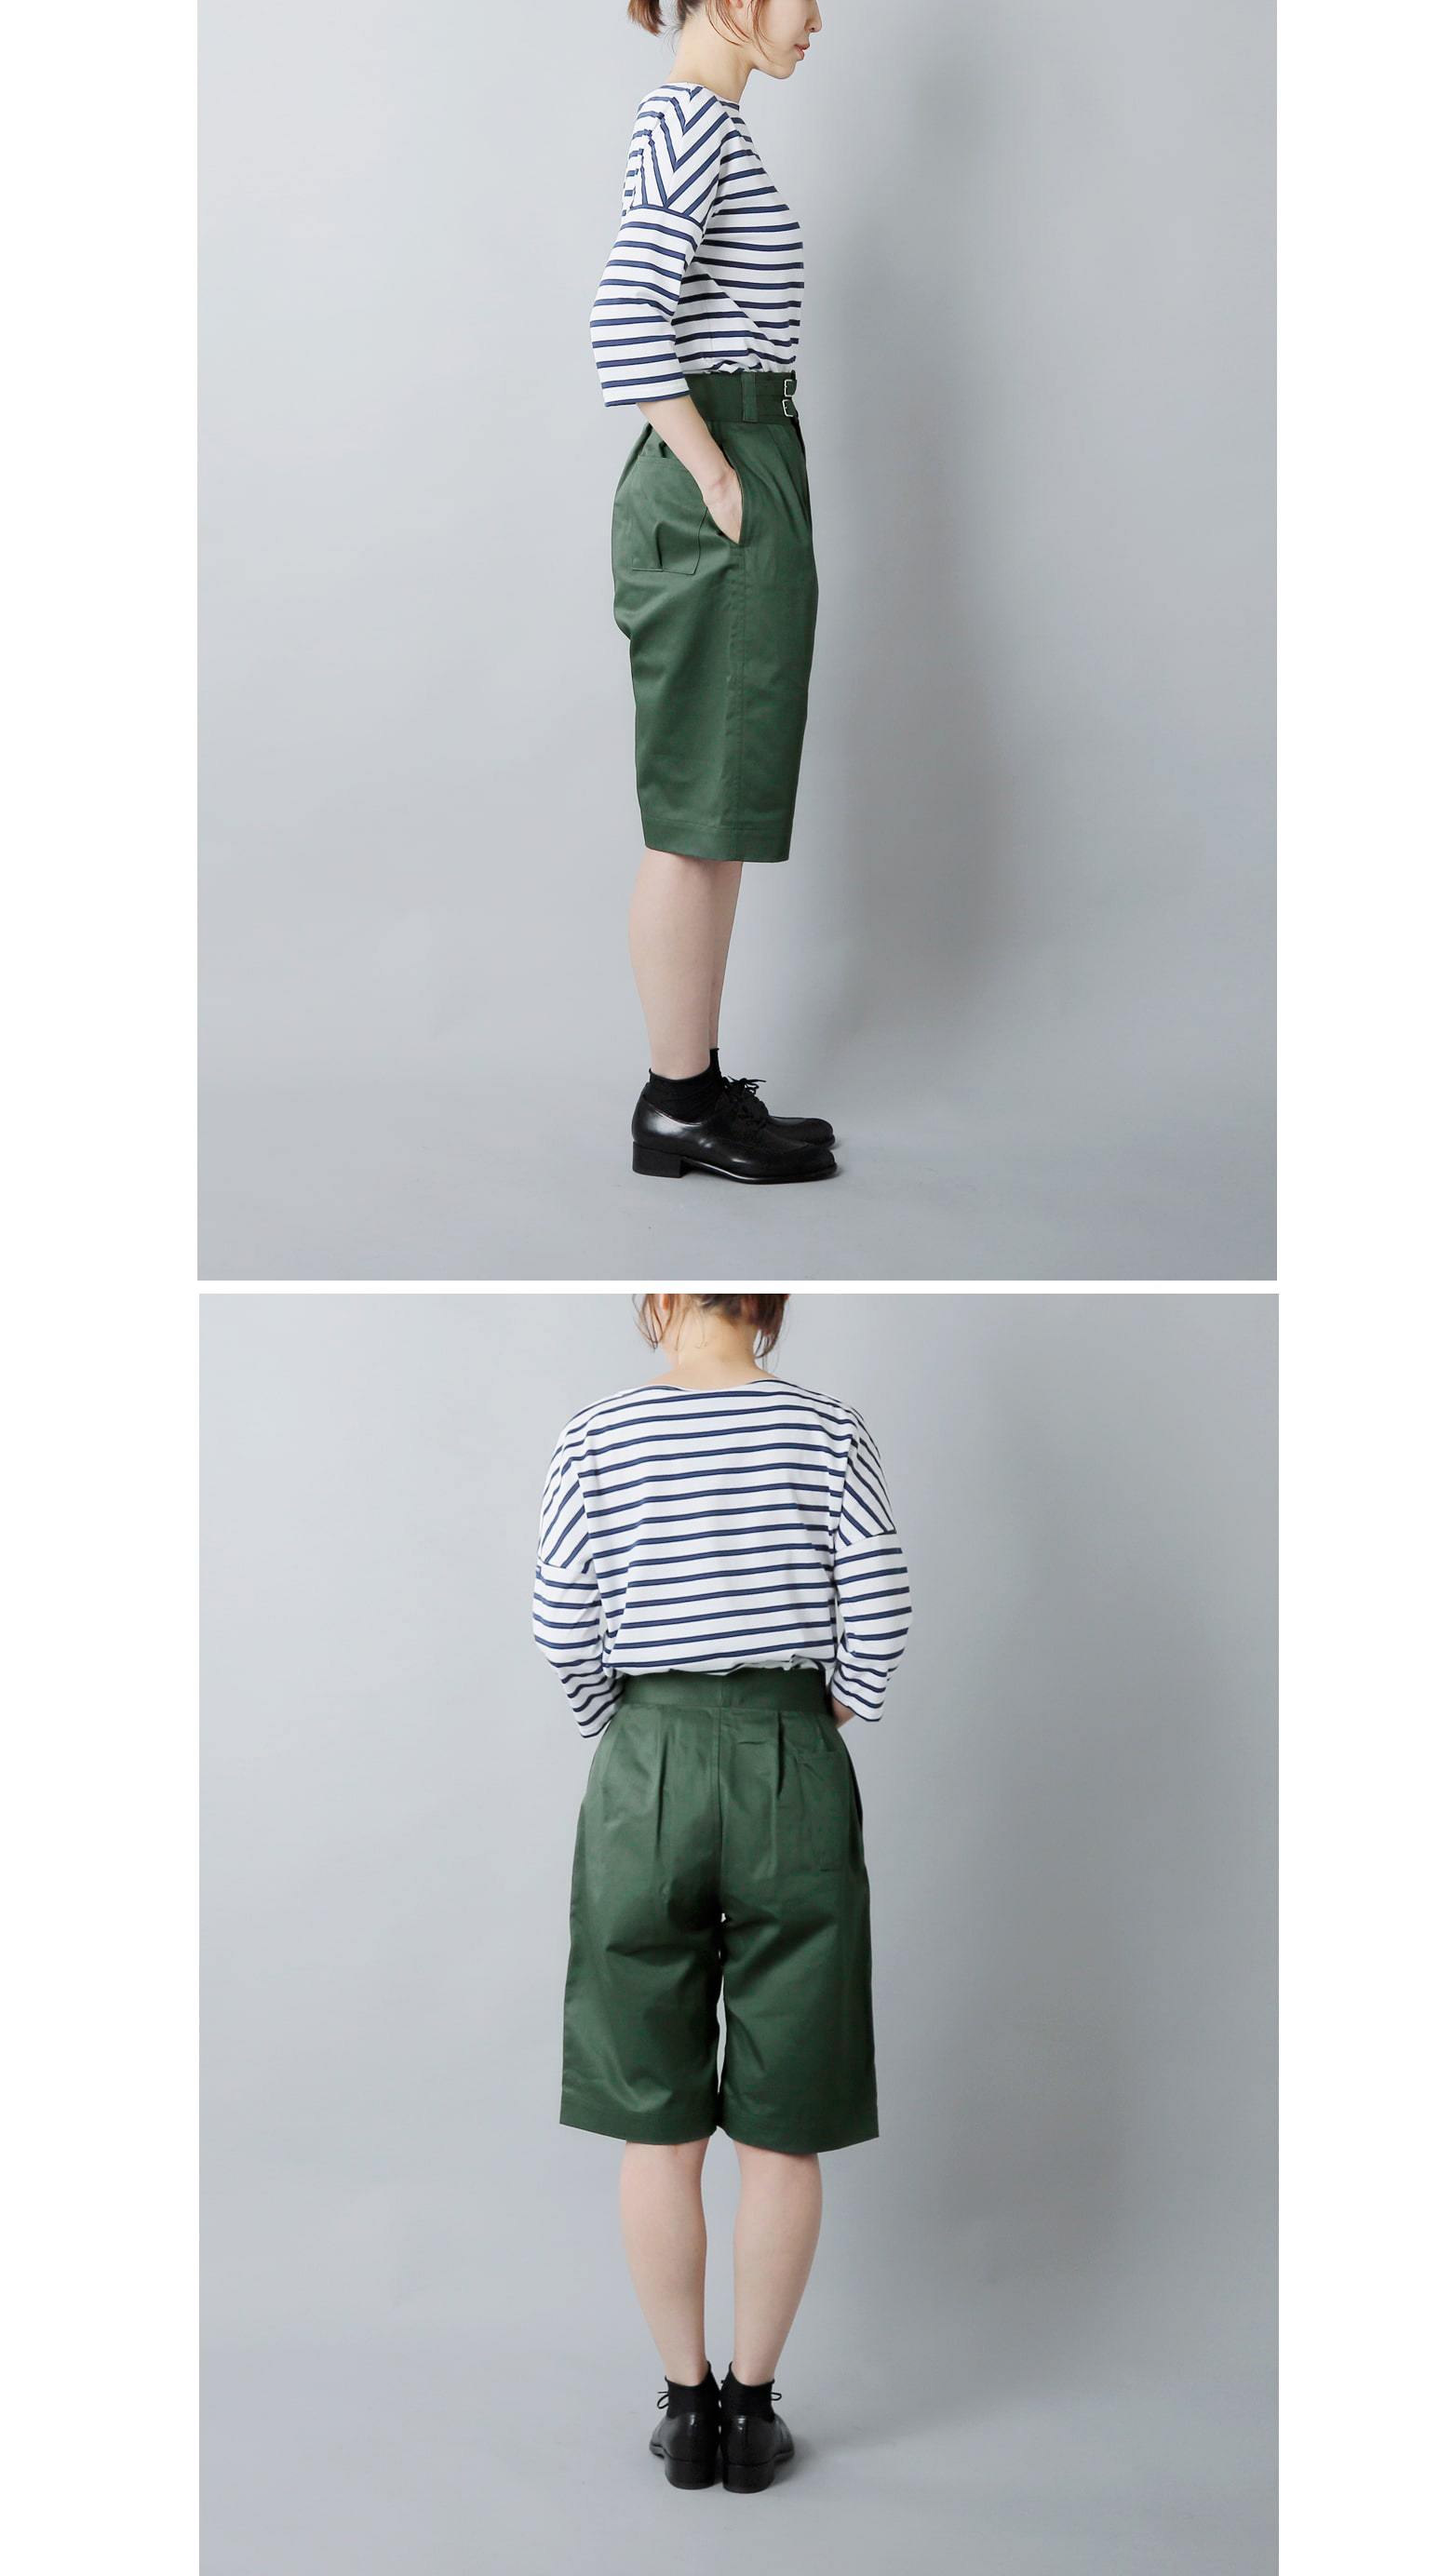 LENO(リノ)グルカショートトラウザーズ”Gurkha Short Trousers” leno-pt002